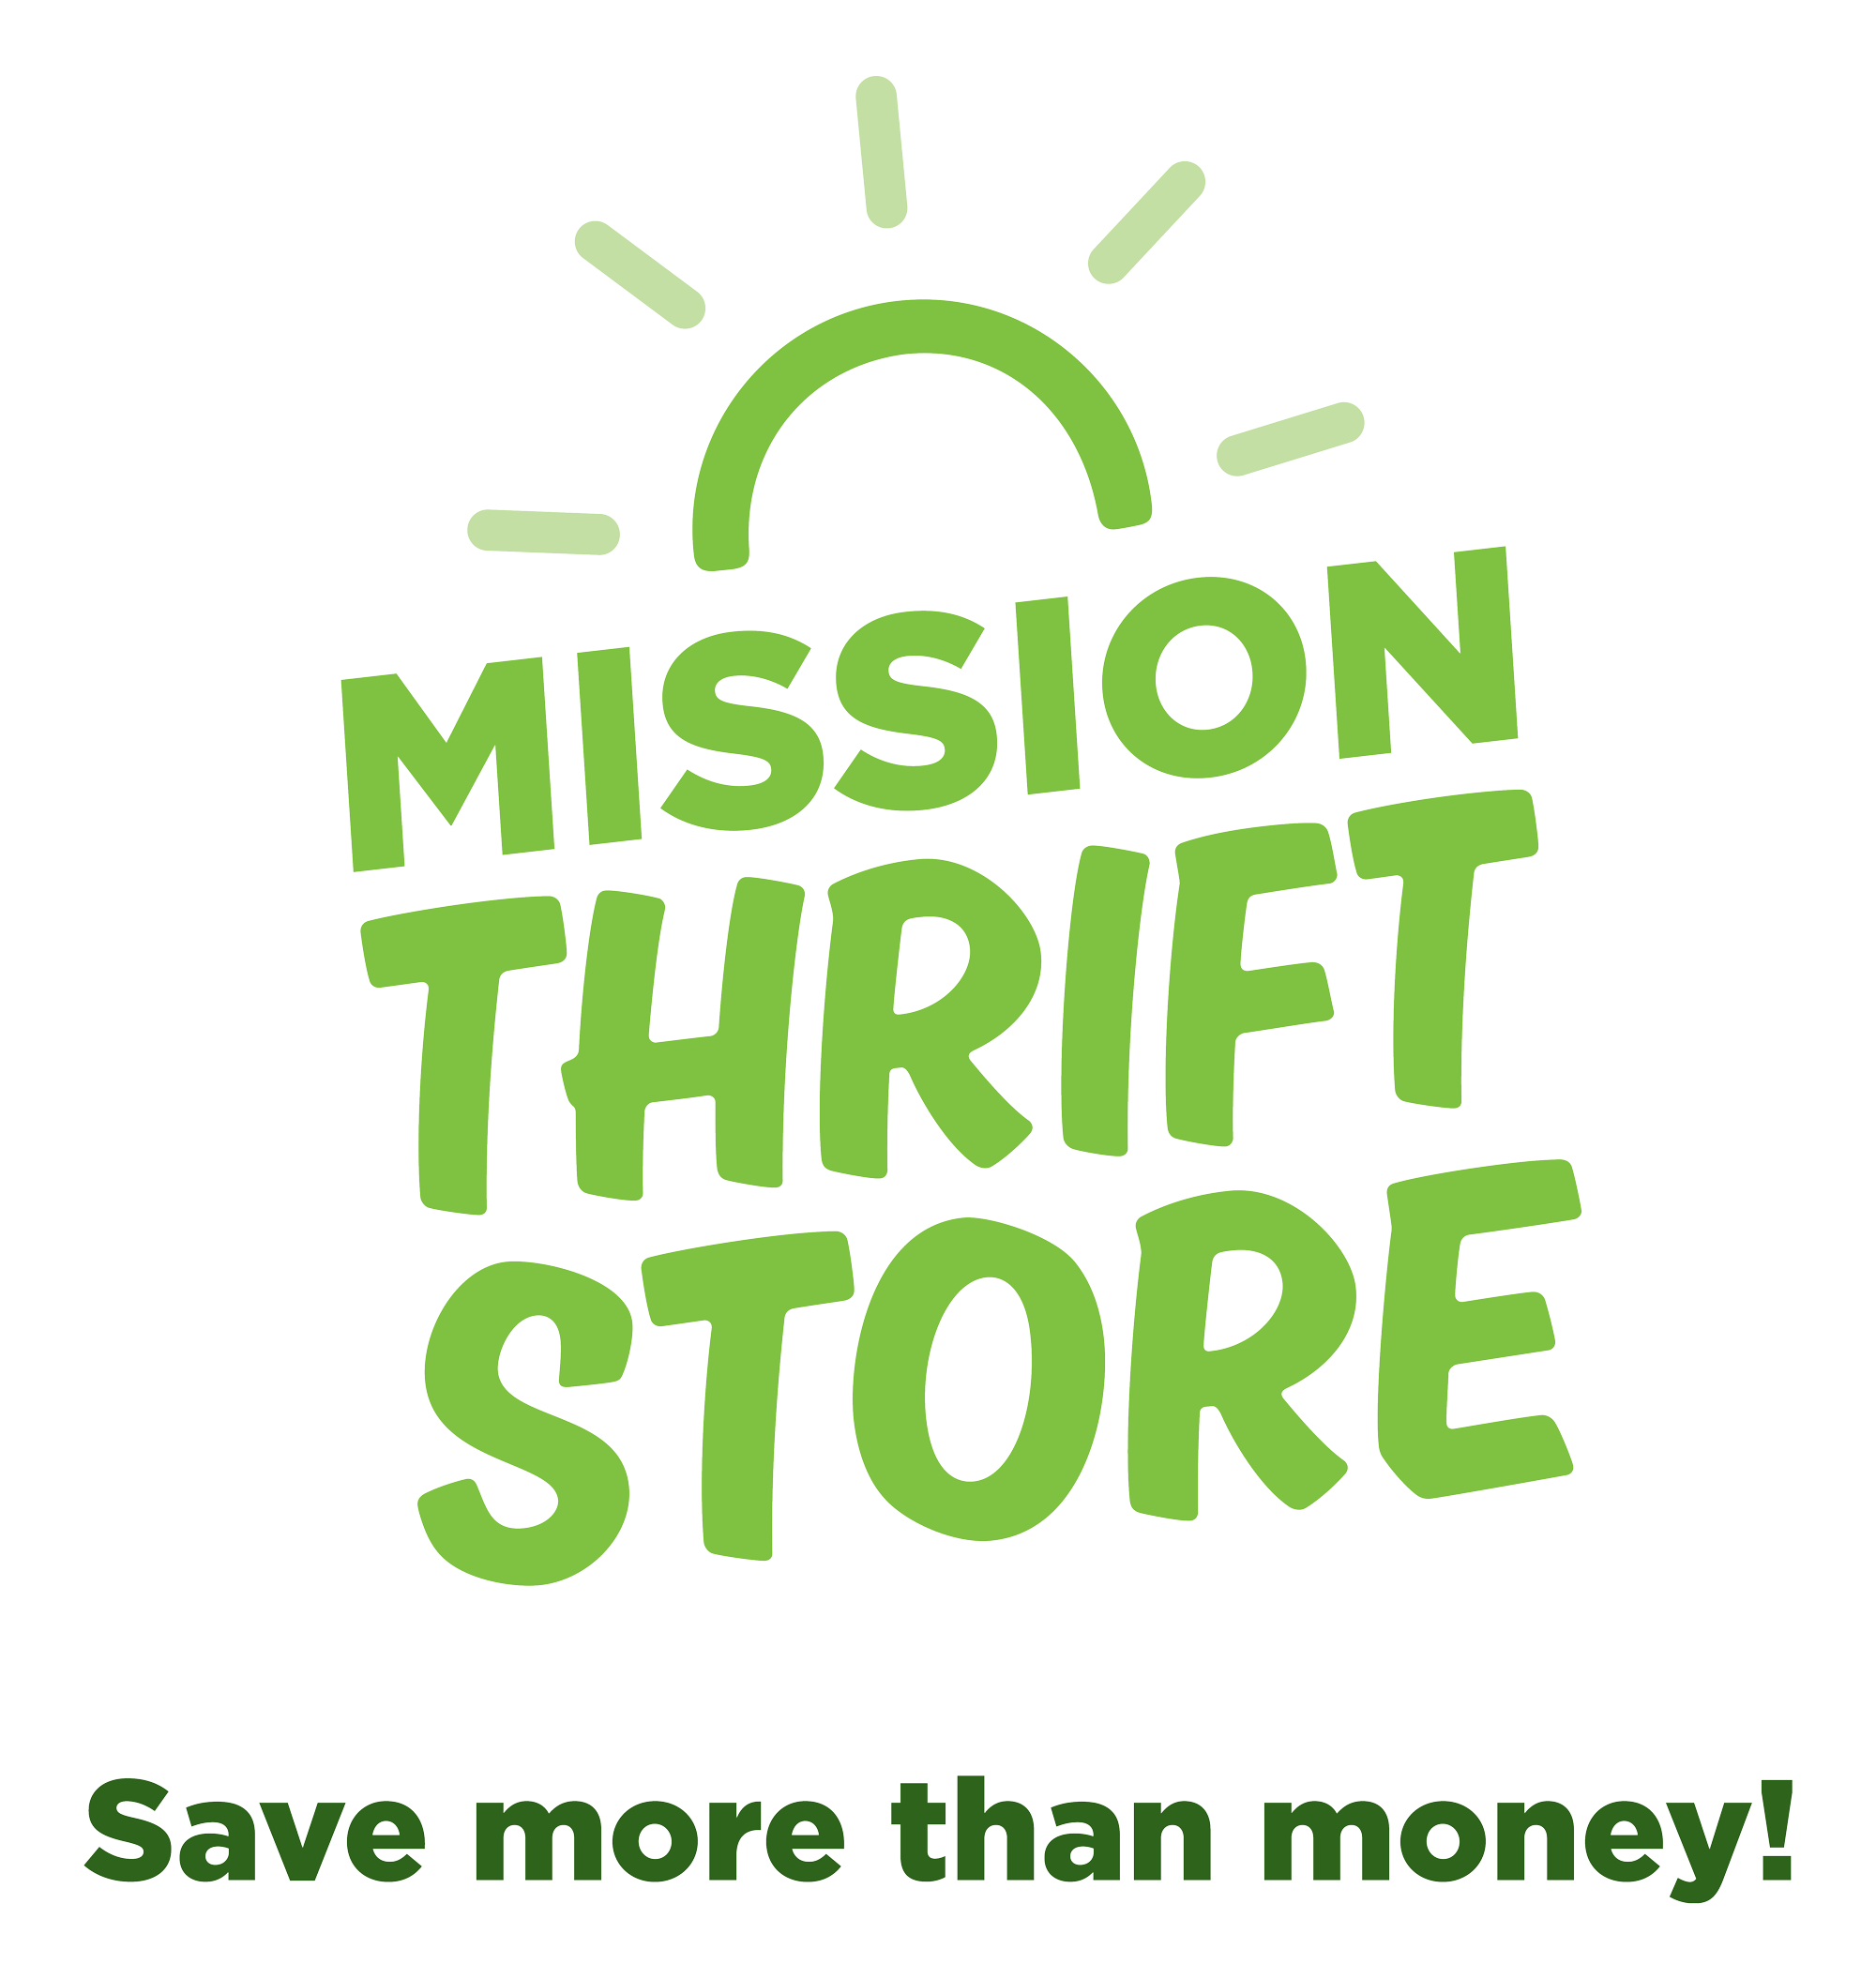 Thrift Logo - Mission Thrift Store. Mission Thrift Store